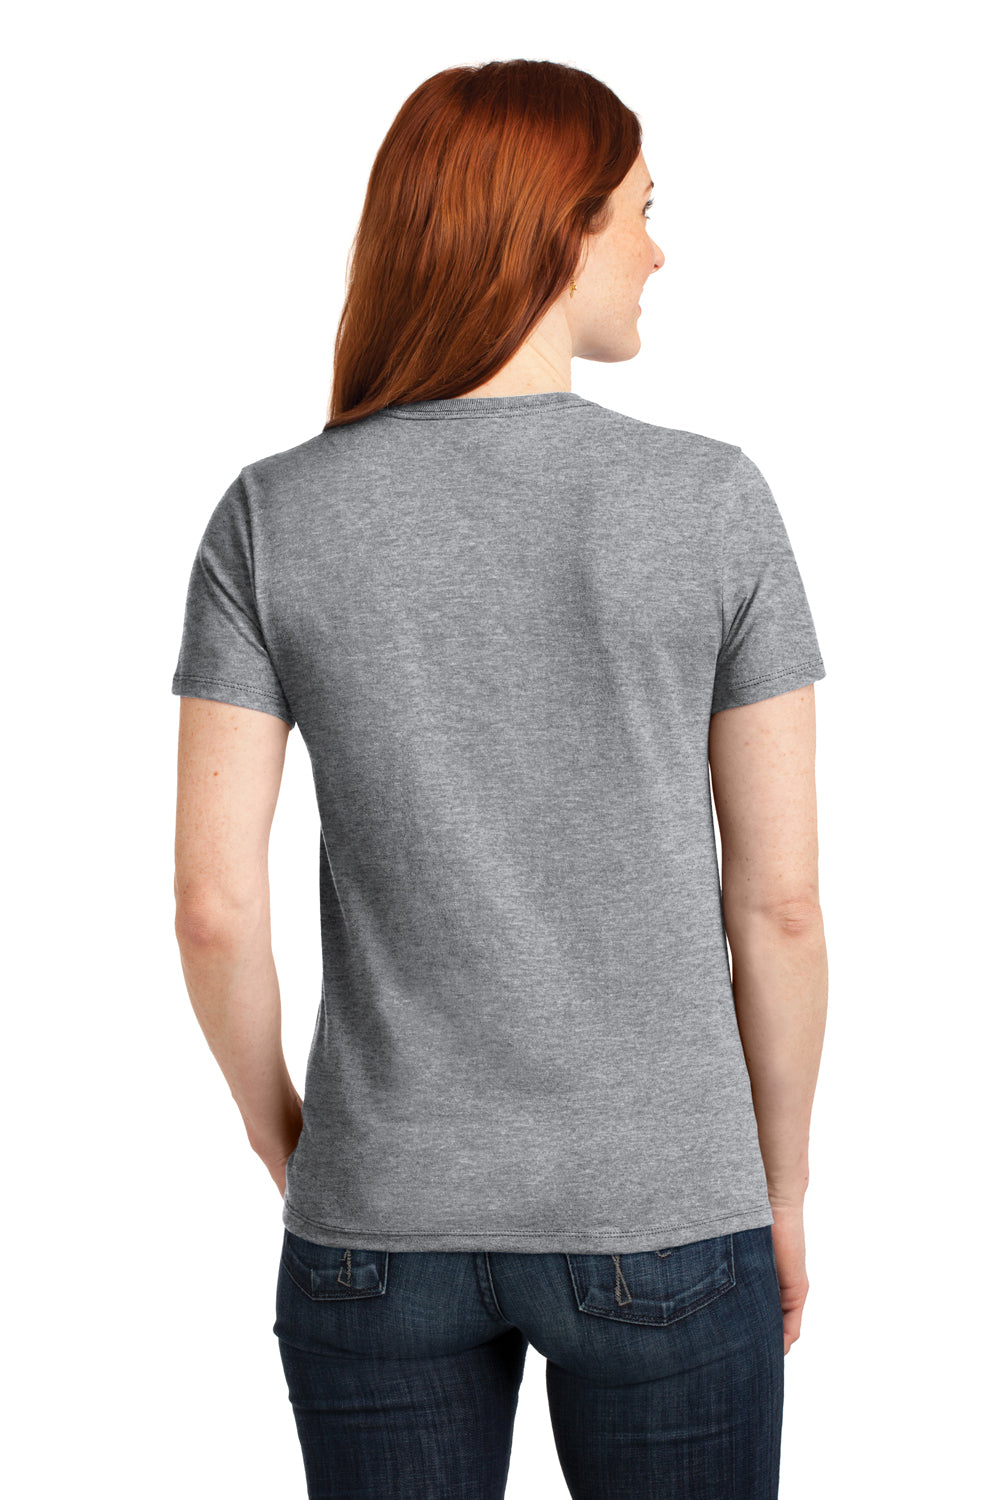 Port & Company LPC55 Womens Core Short Sleeve Crewneck T-Shirt Heather Grey Back